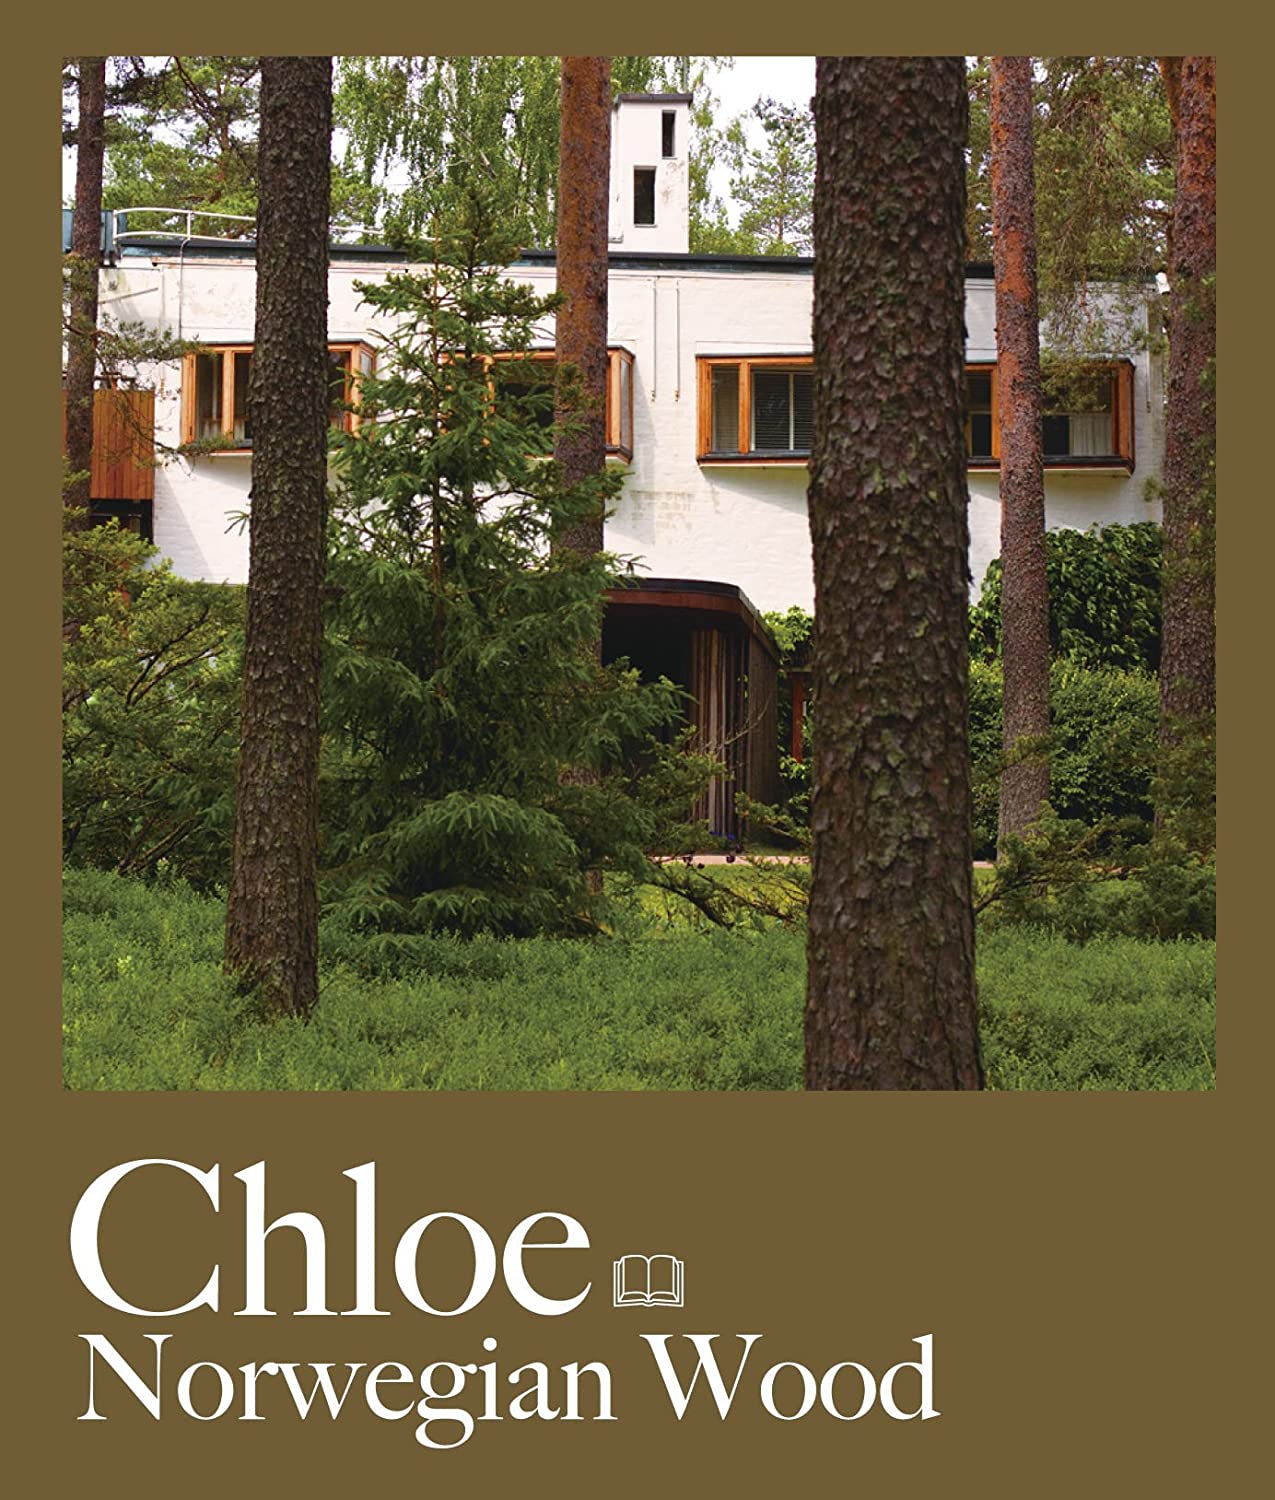 CHLOE "Norwegian Wood"